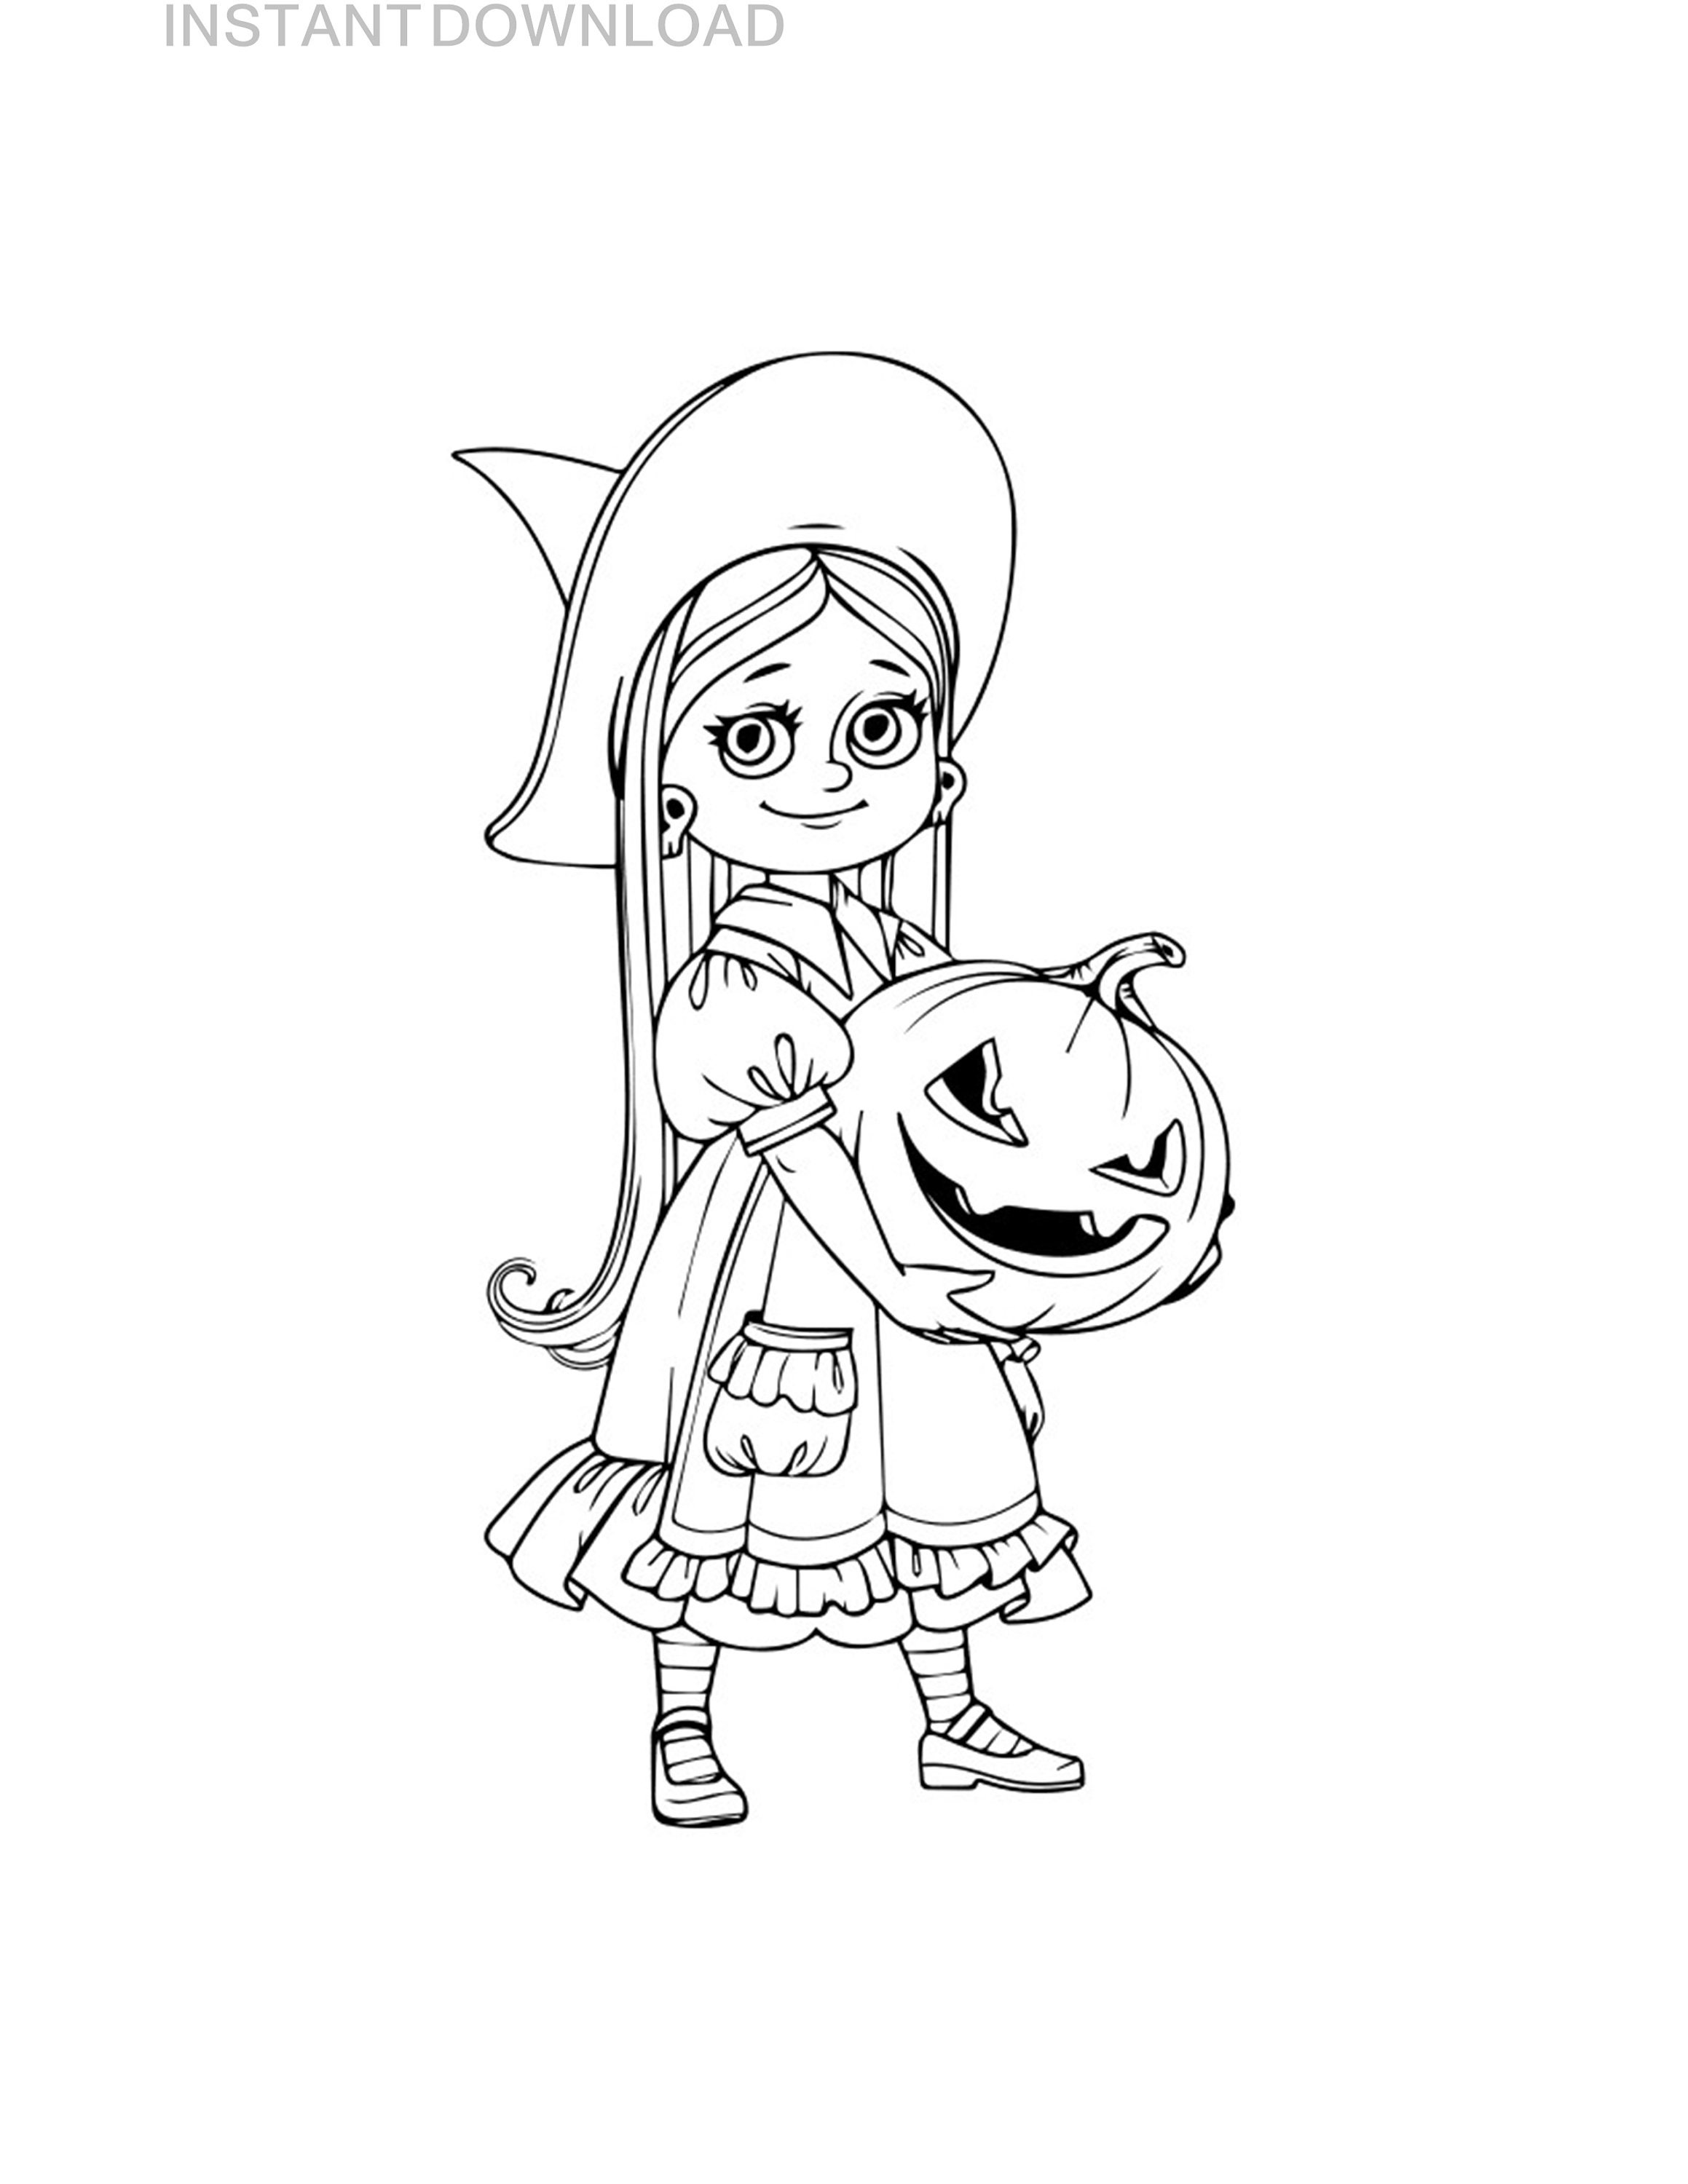 Printable halloween princess coloring page plus bonus instant download digital file x printable